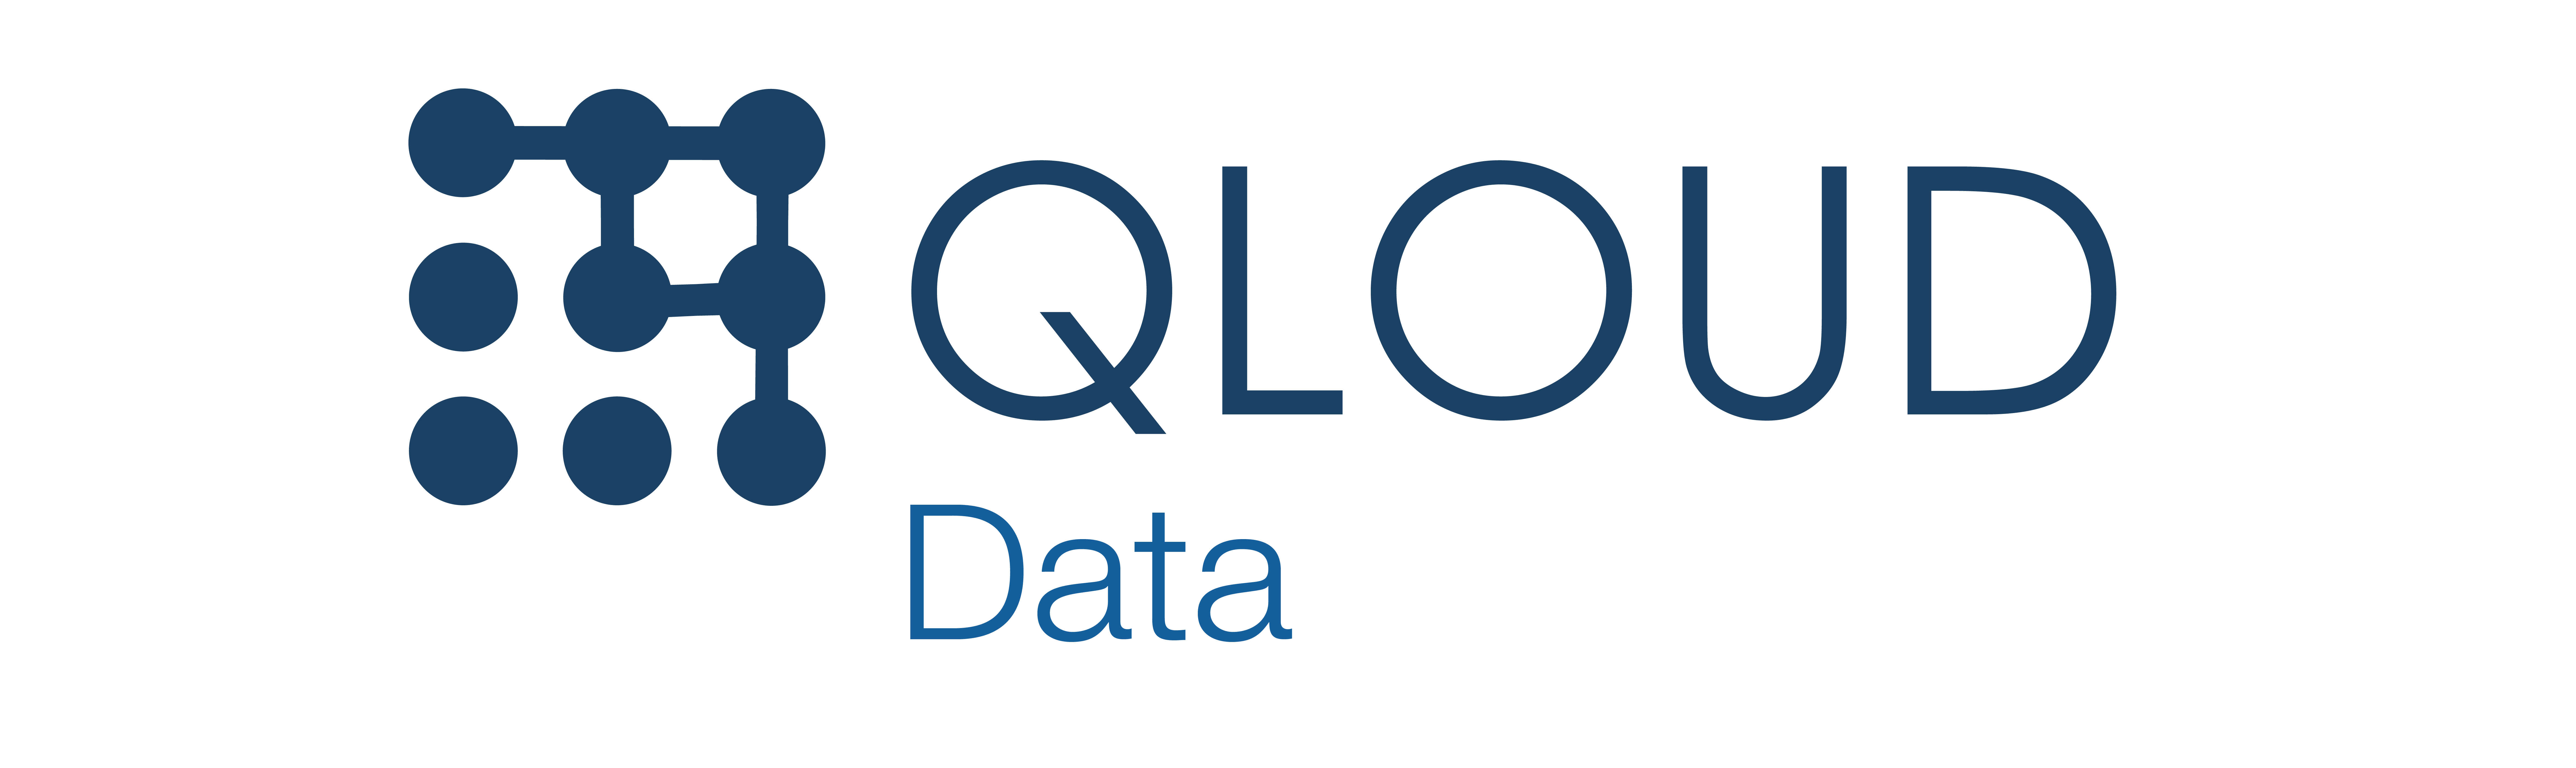 Qloud Data